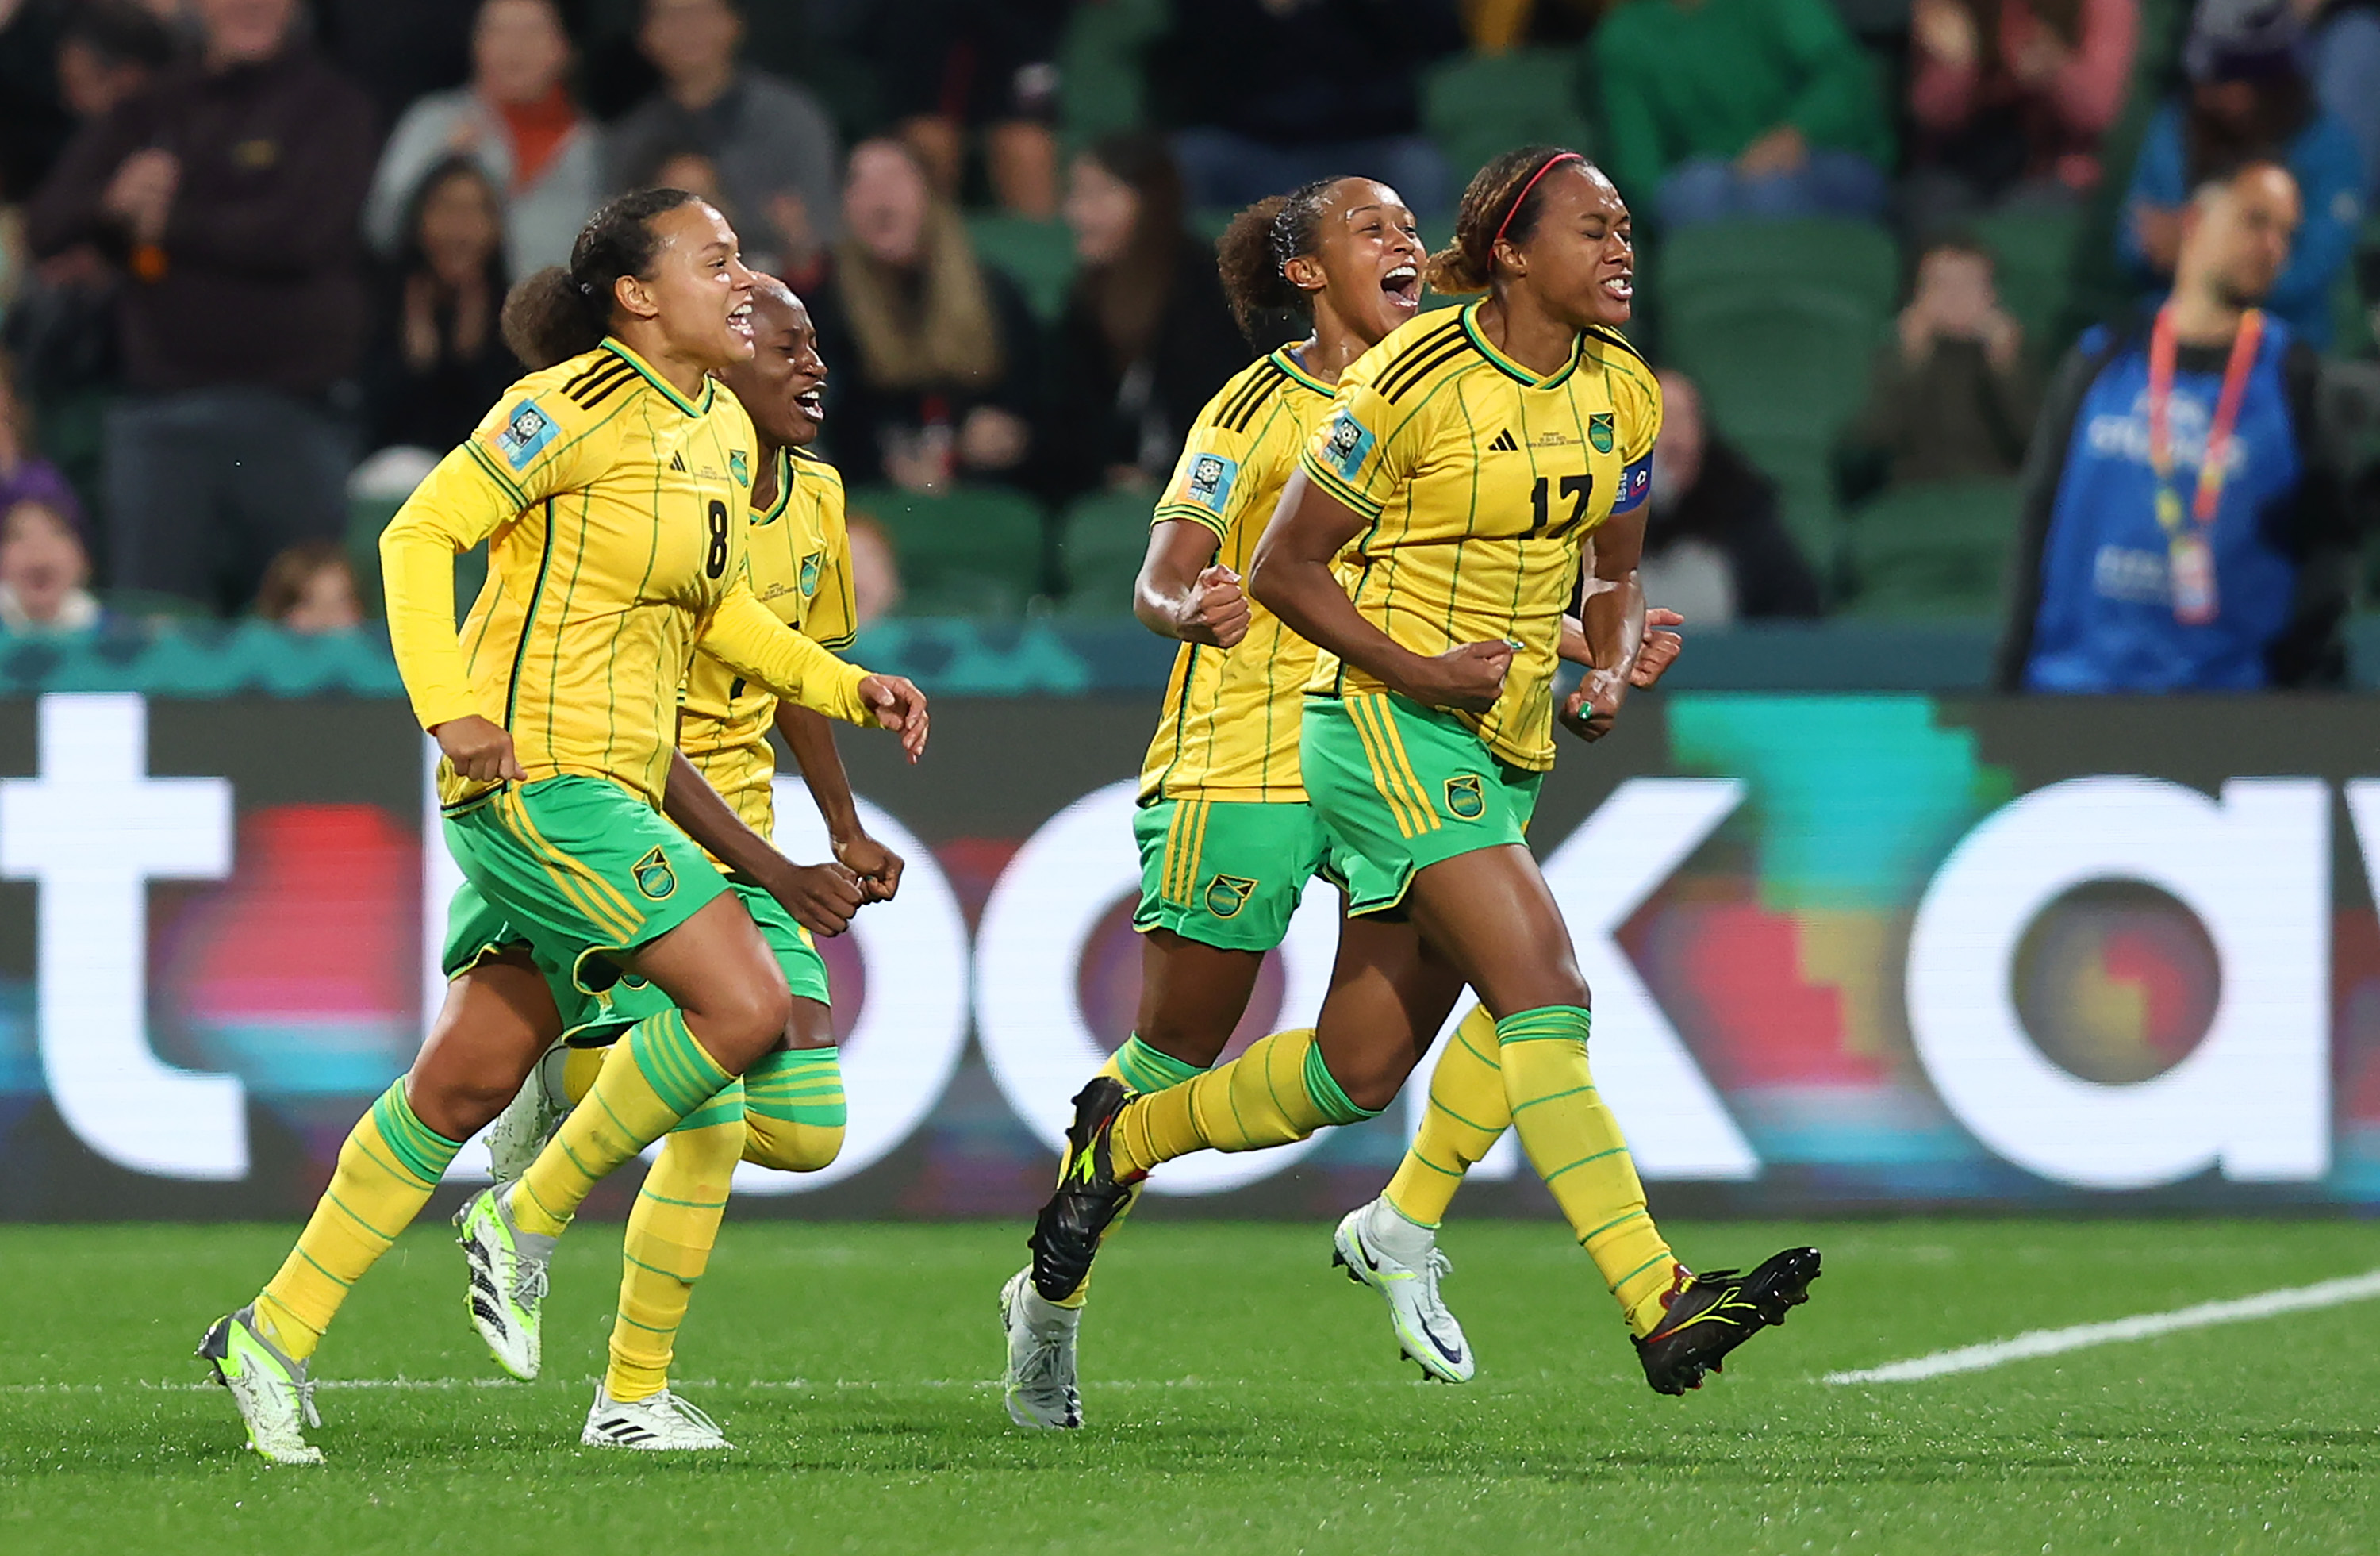 Watch Jamaica vs Panama Women's World Cup highlights